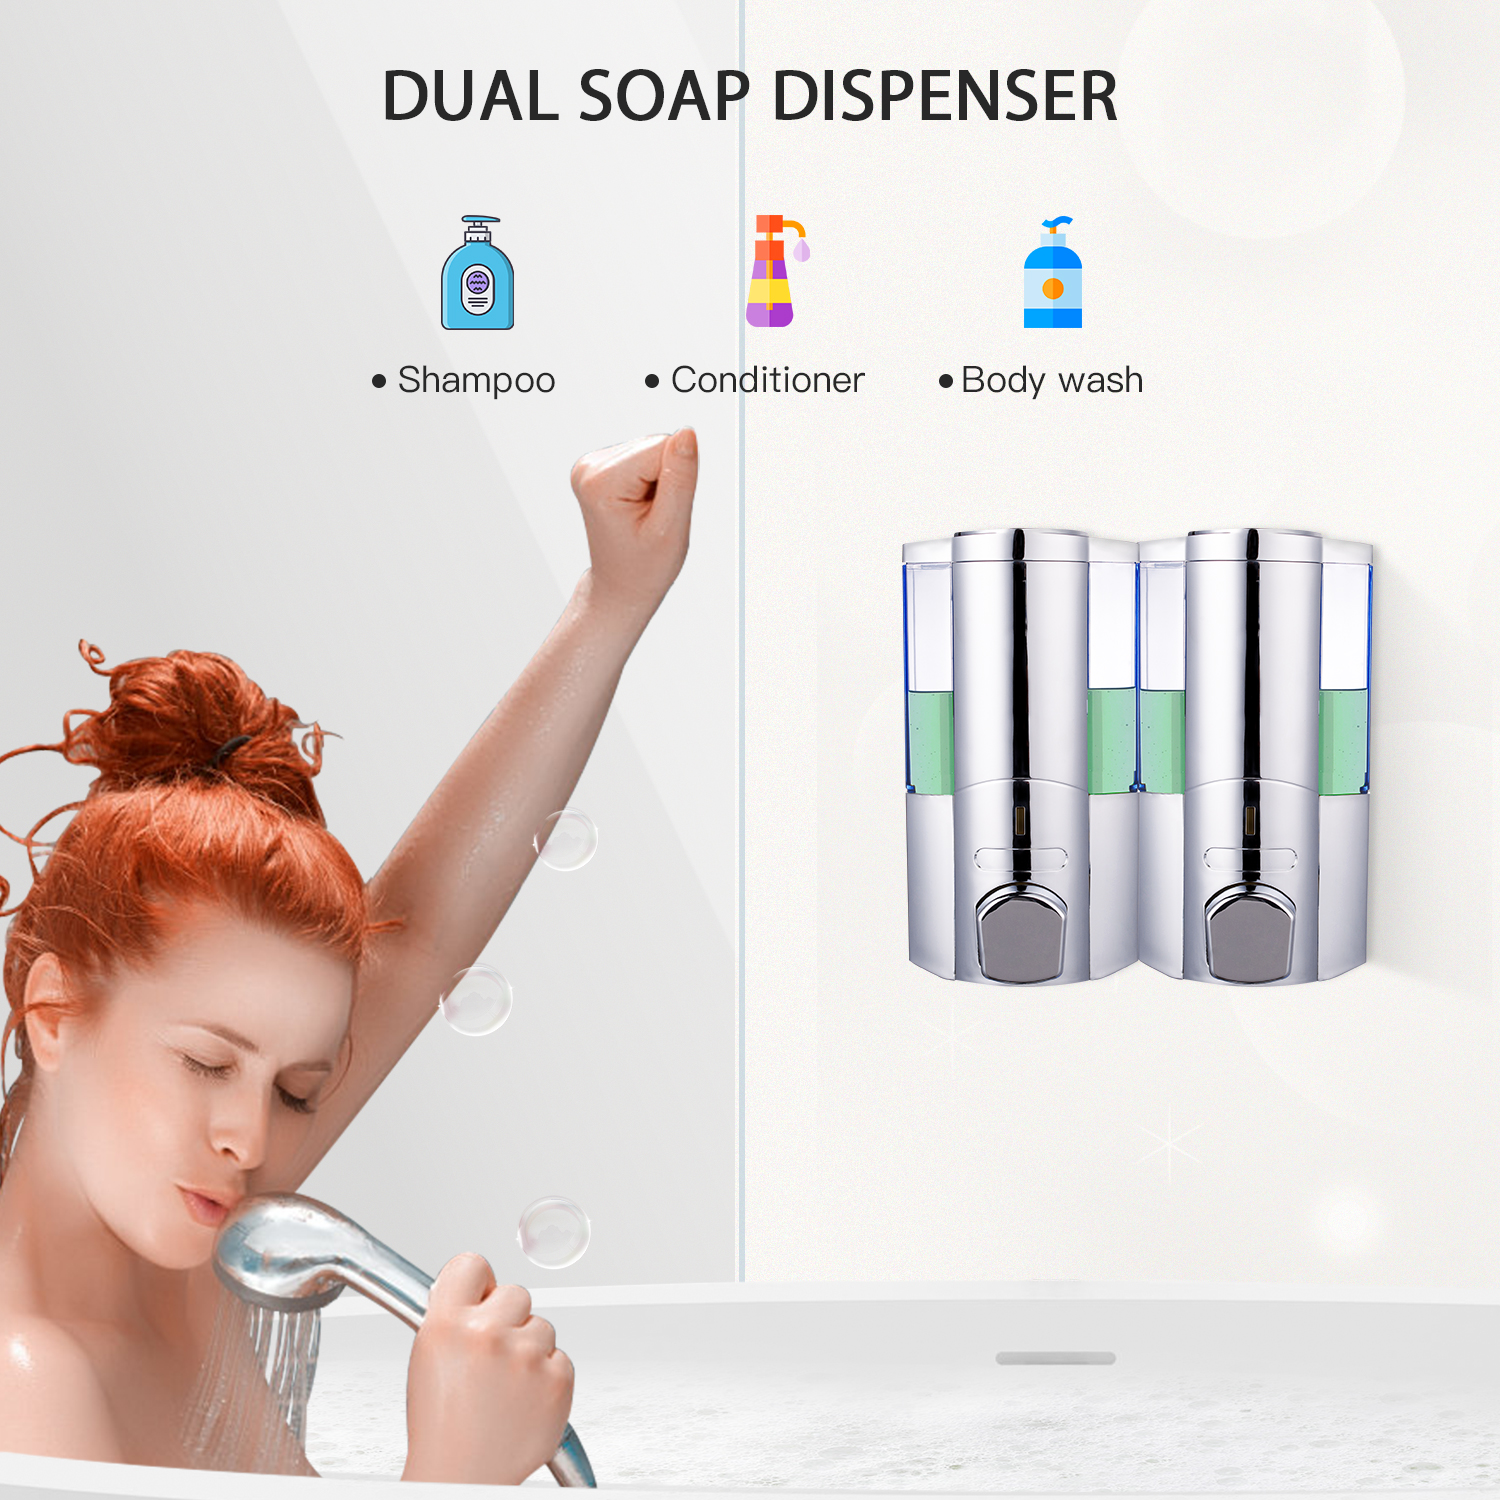 Shampoo and Conditioner Dispenser.jpg